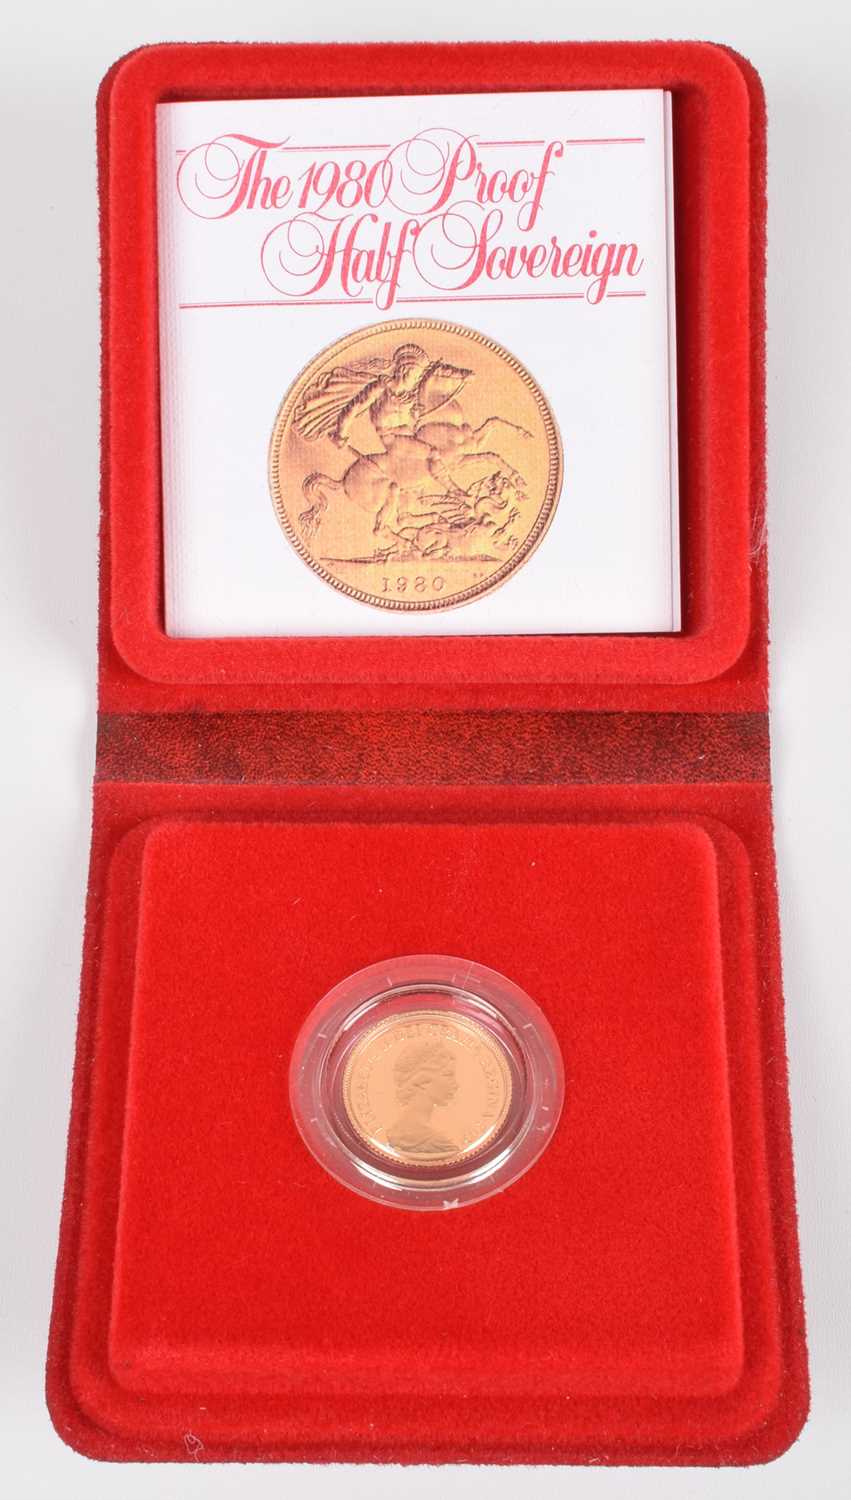 Lot 92 - 1980 Royal Mint, Proof Half-Sovereign.